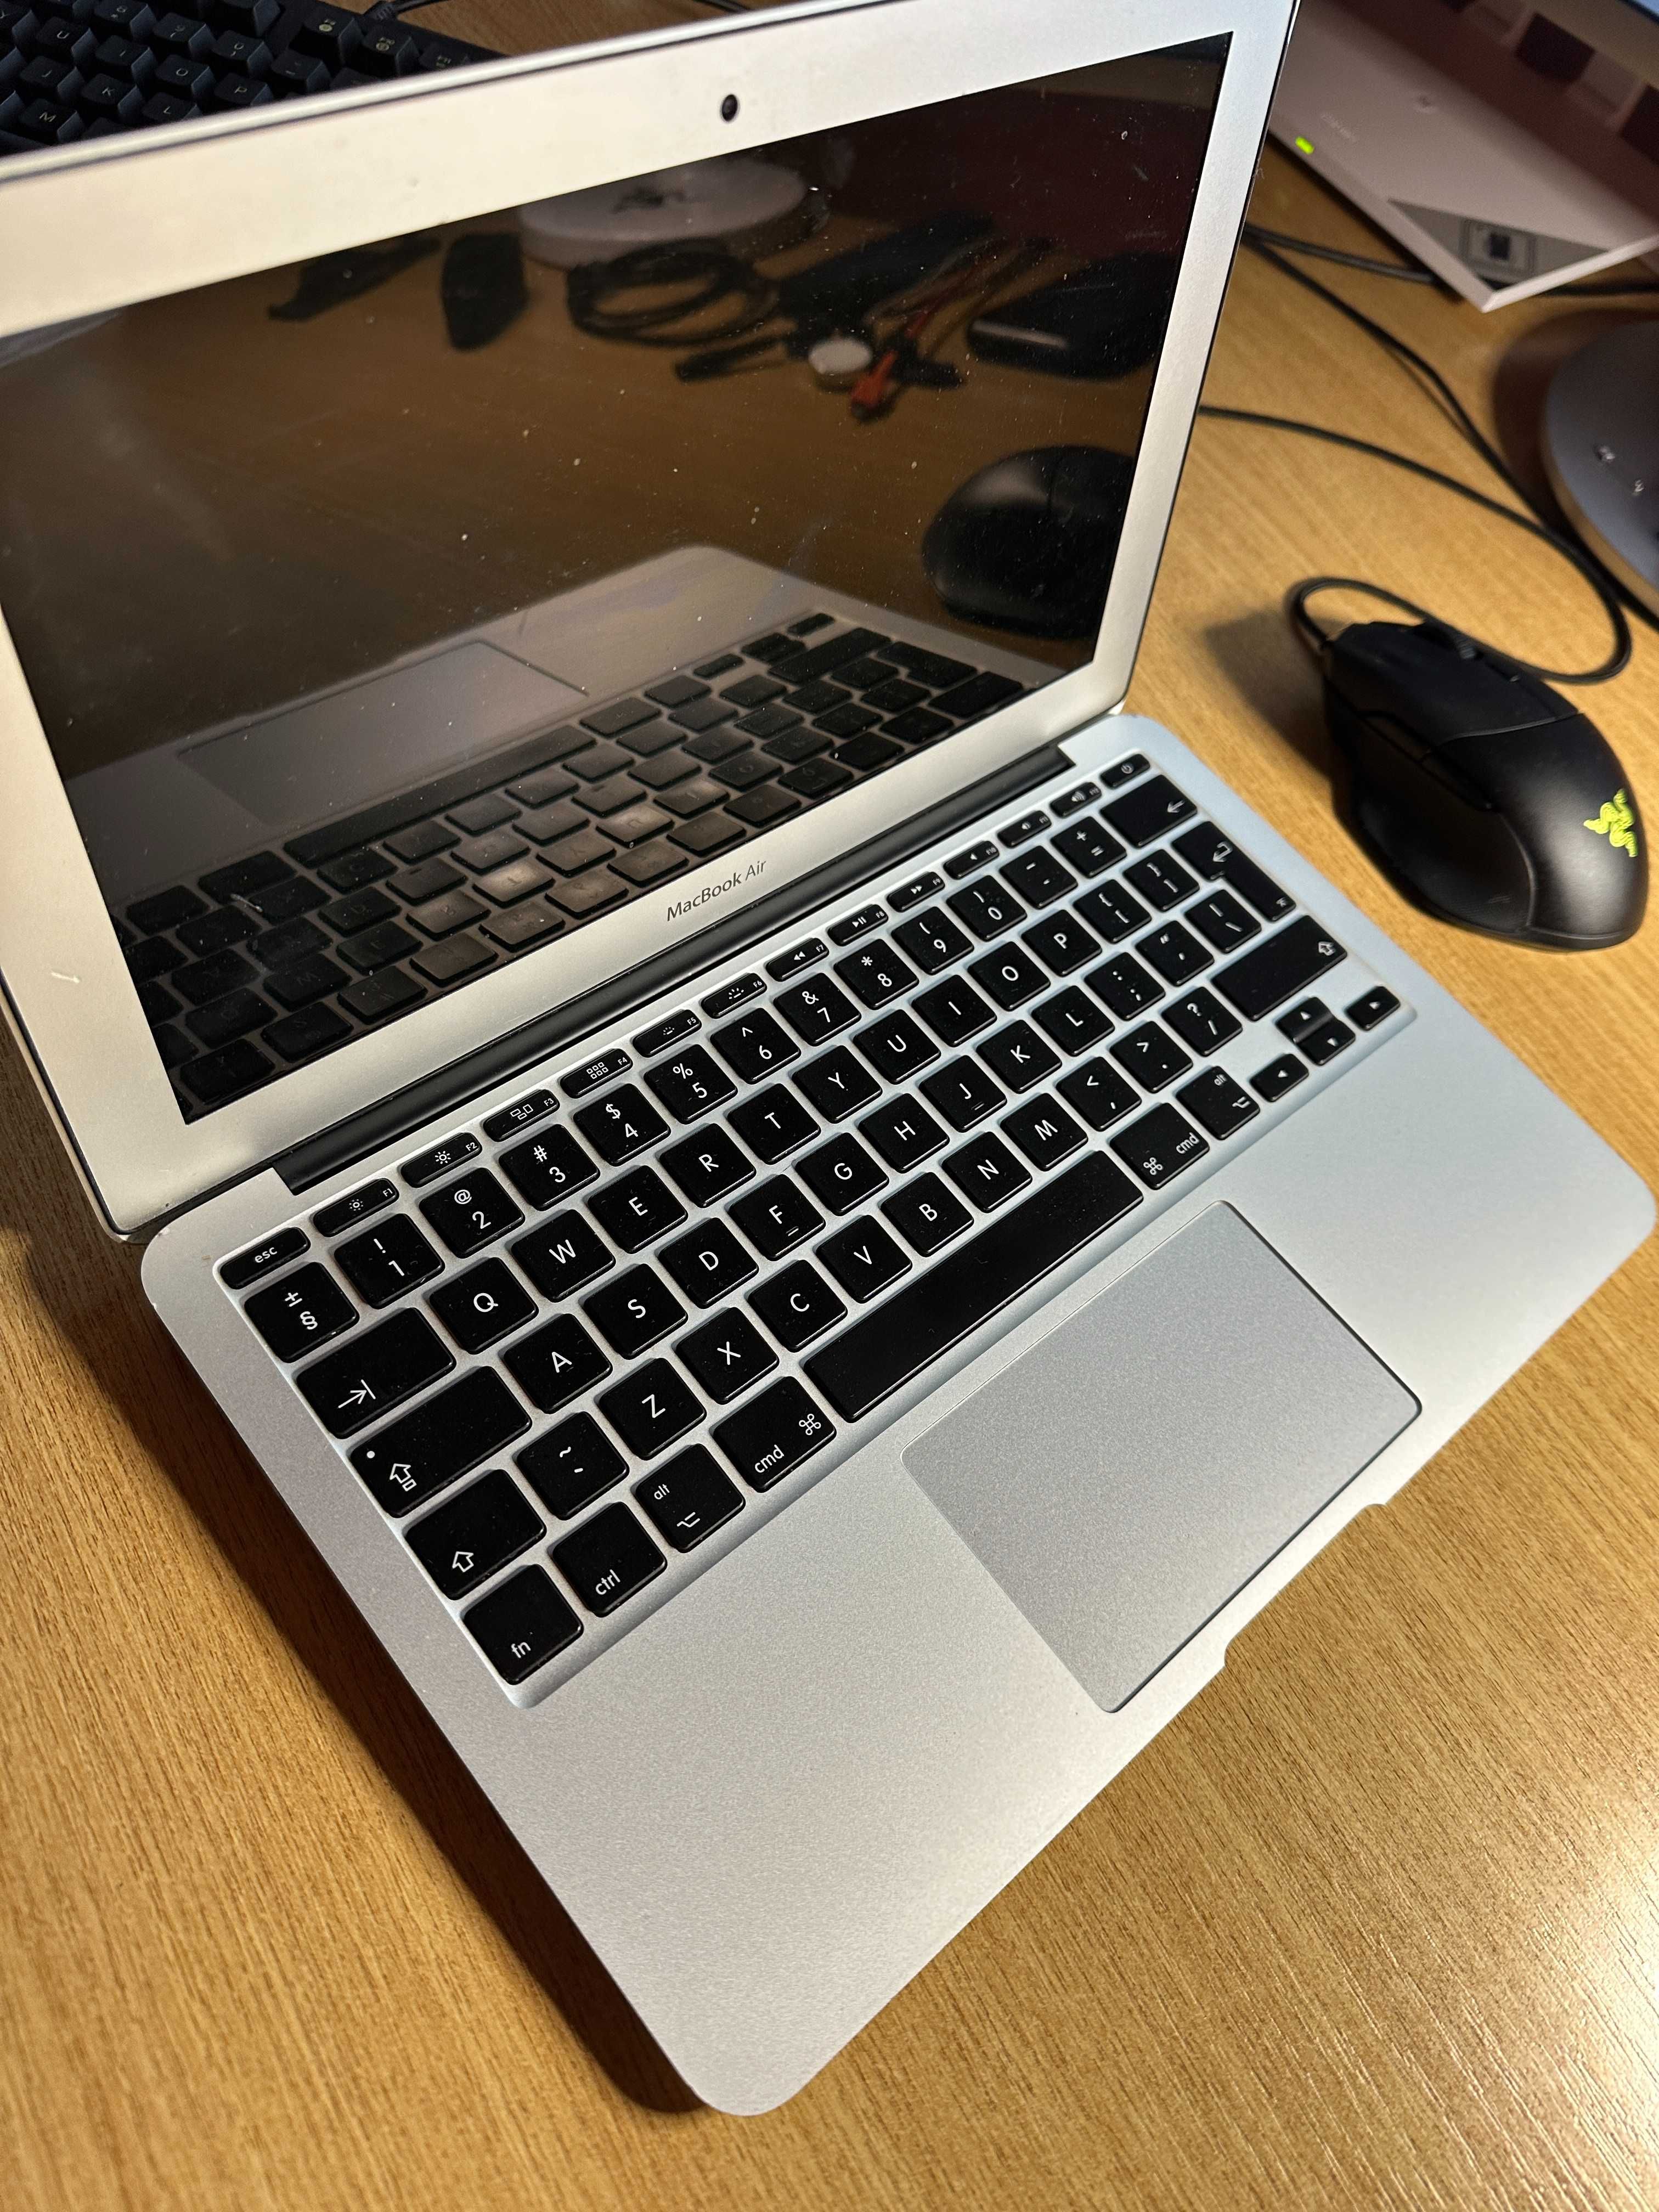 MacBook Air 2014, i5, 128GB, 4Gb RAM